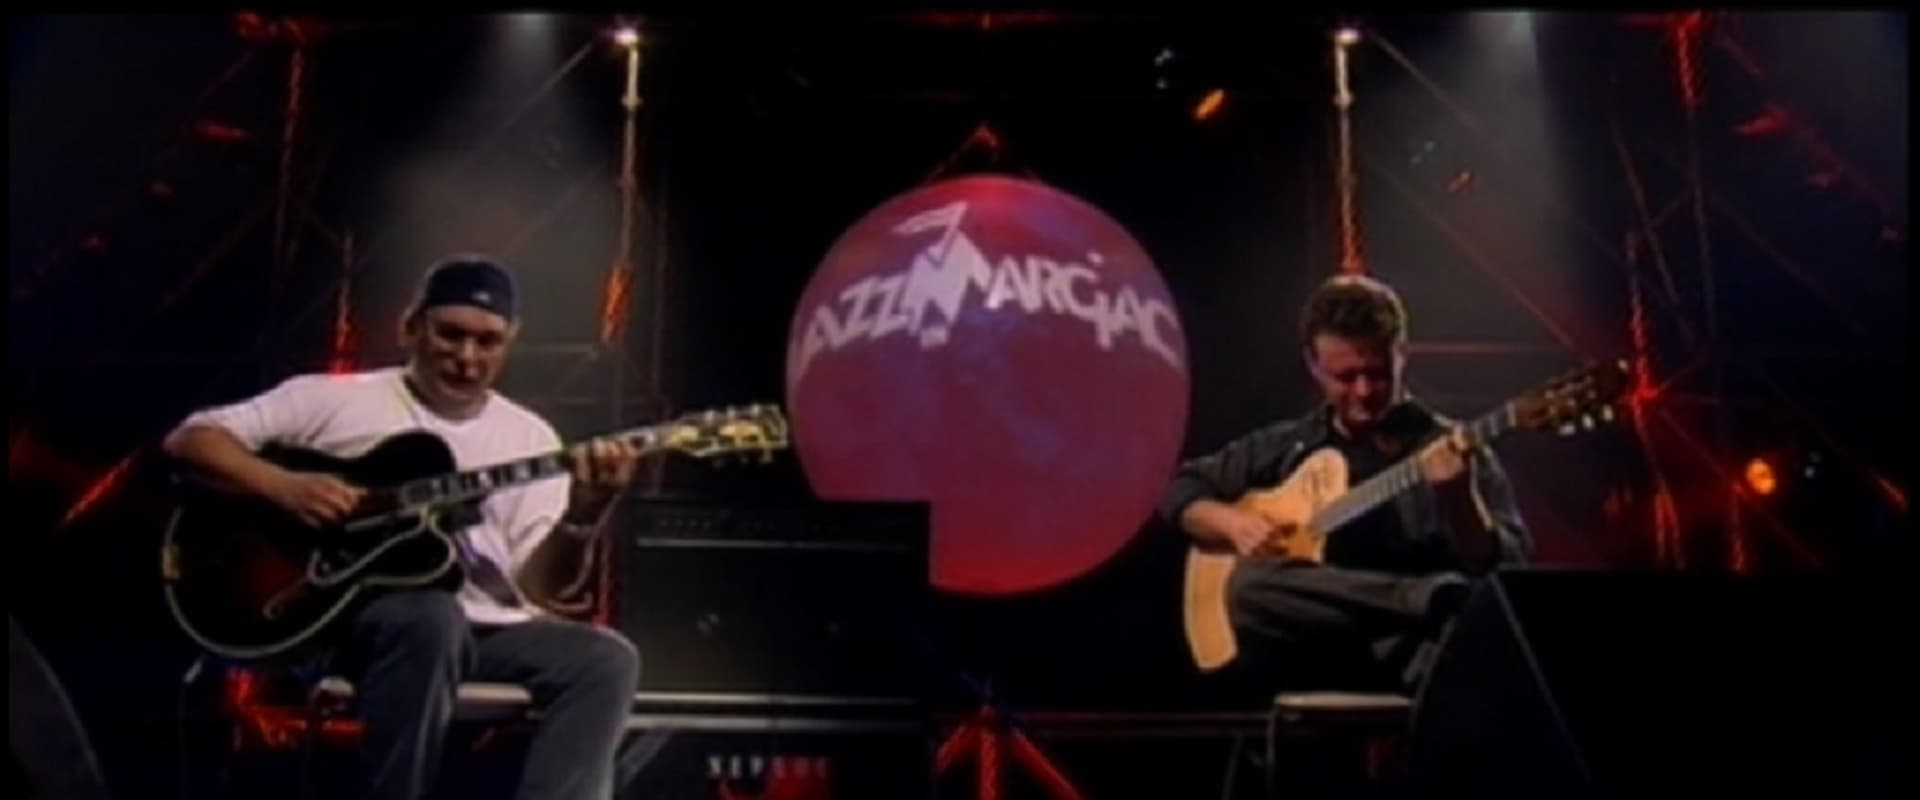 Jazz in Marciac 2000 - Biréli Lagrène et Sylvain Luc